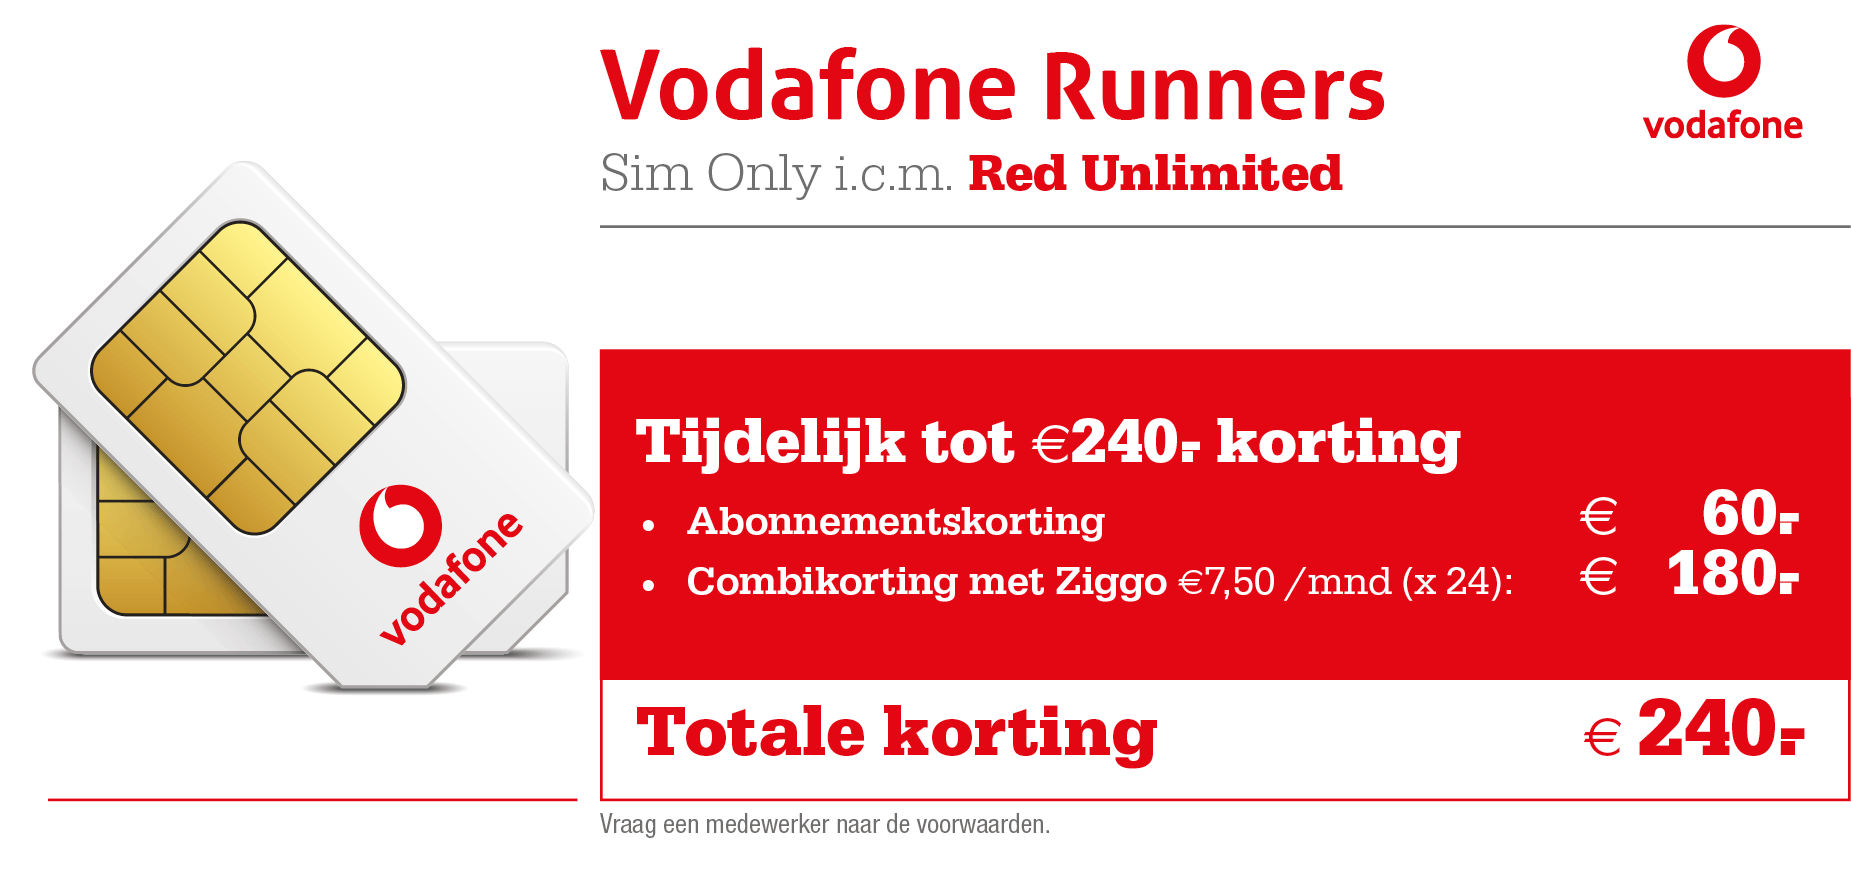 Vodafone Runners Sim Only